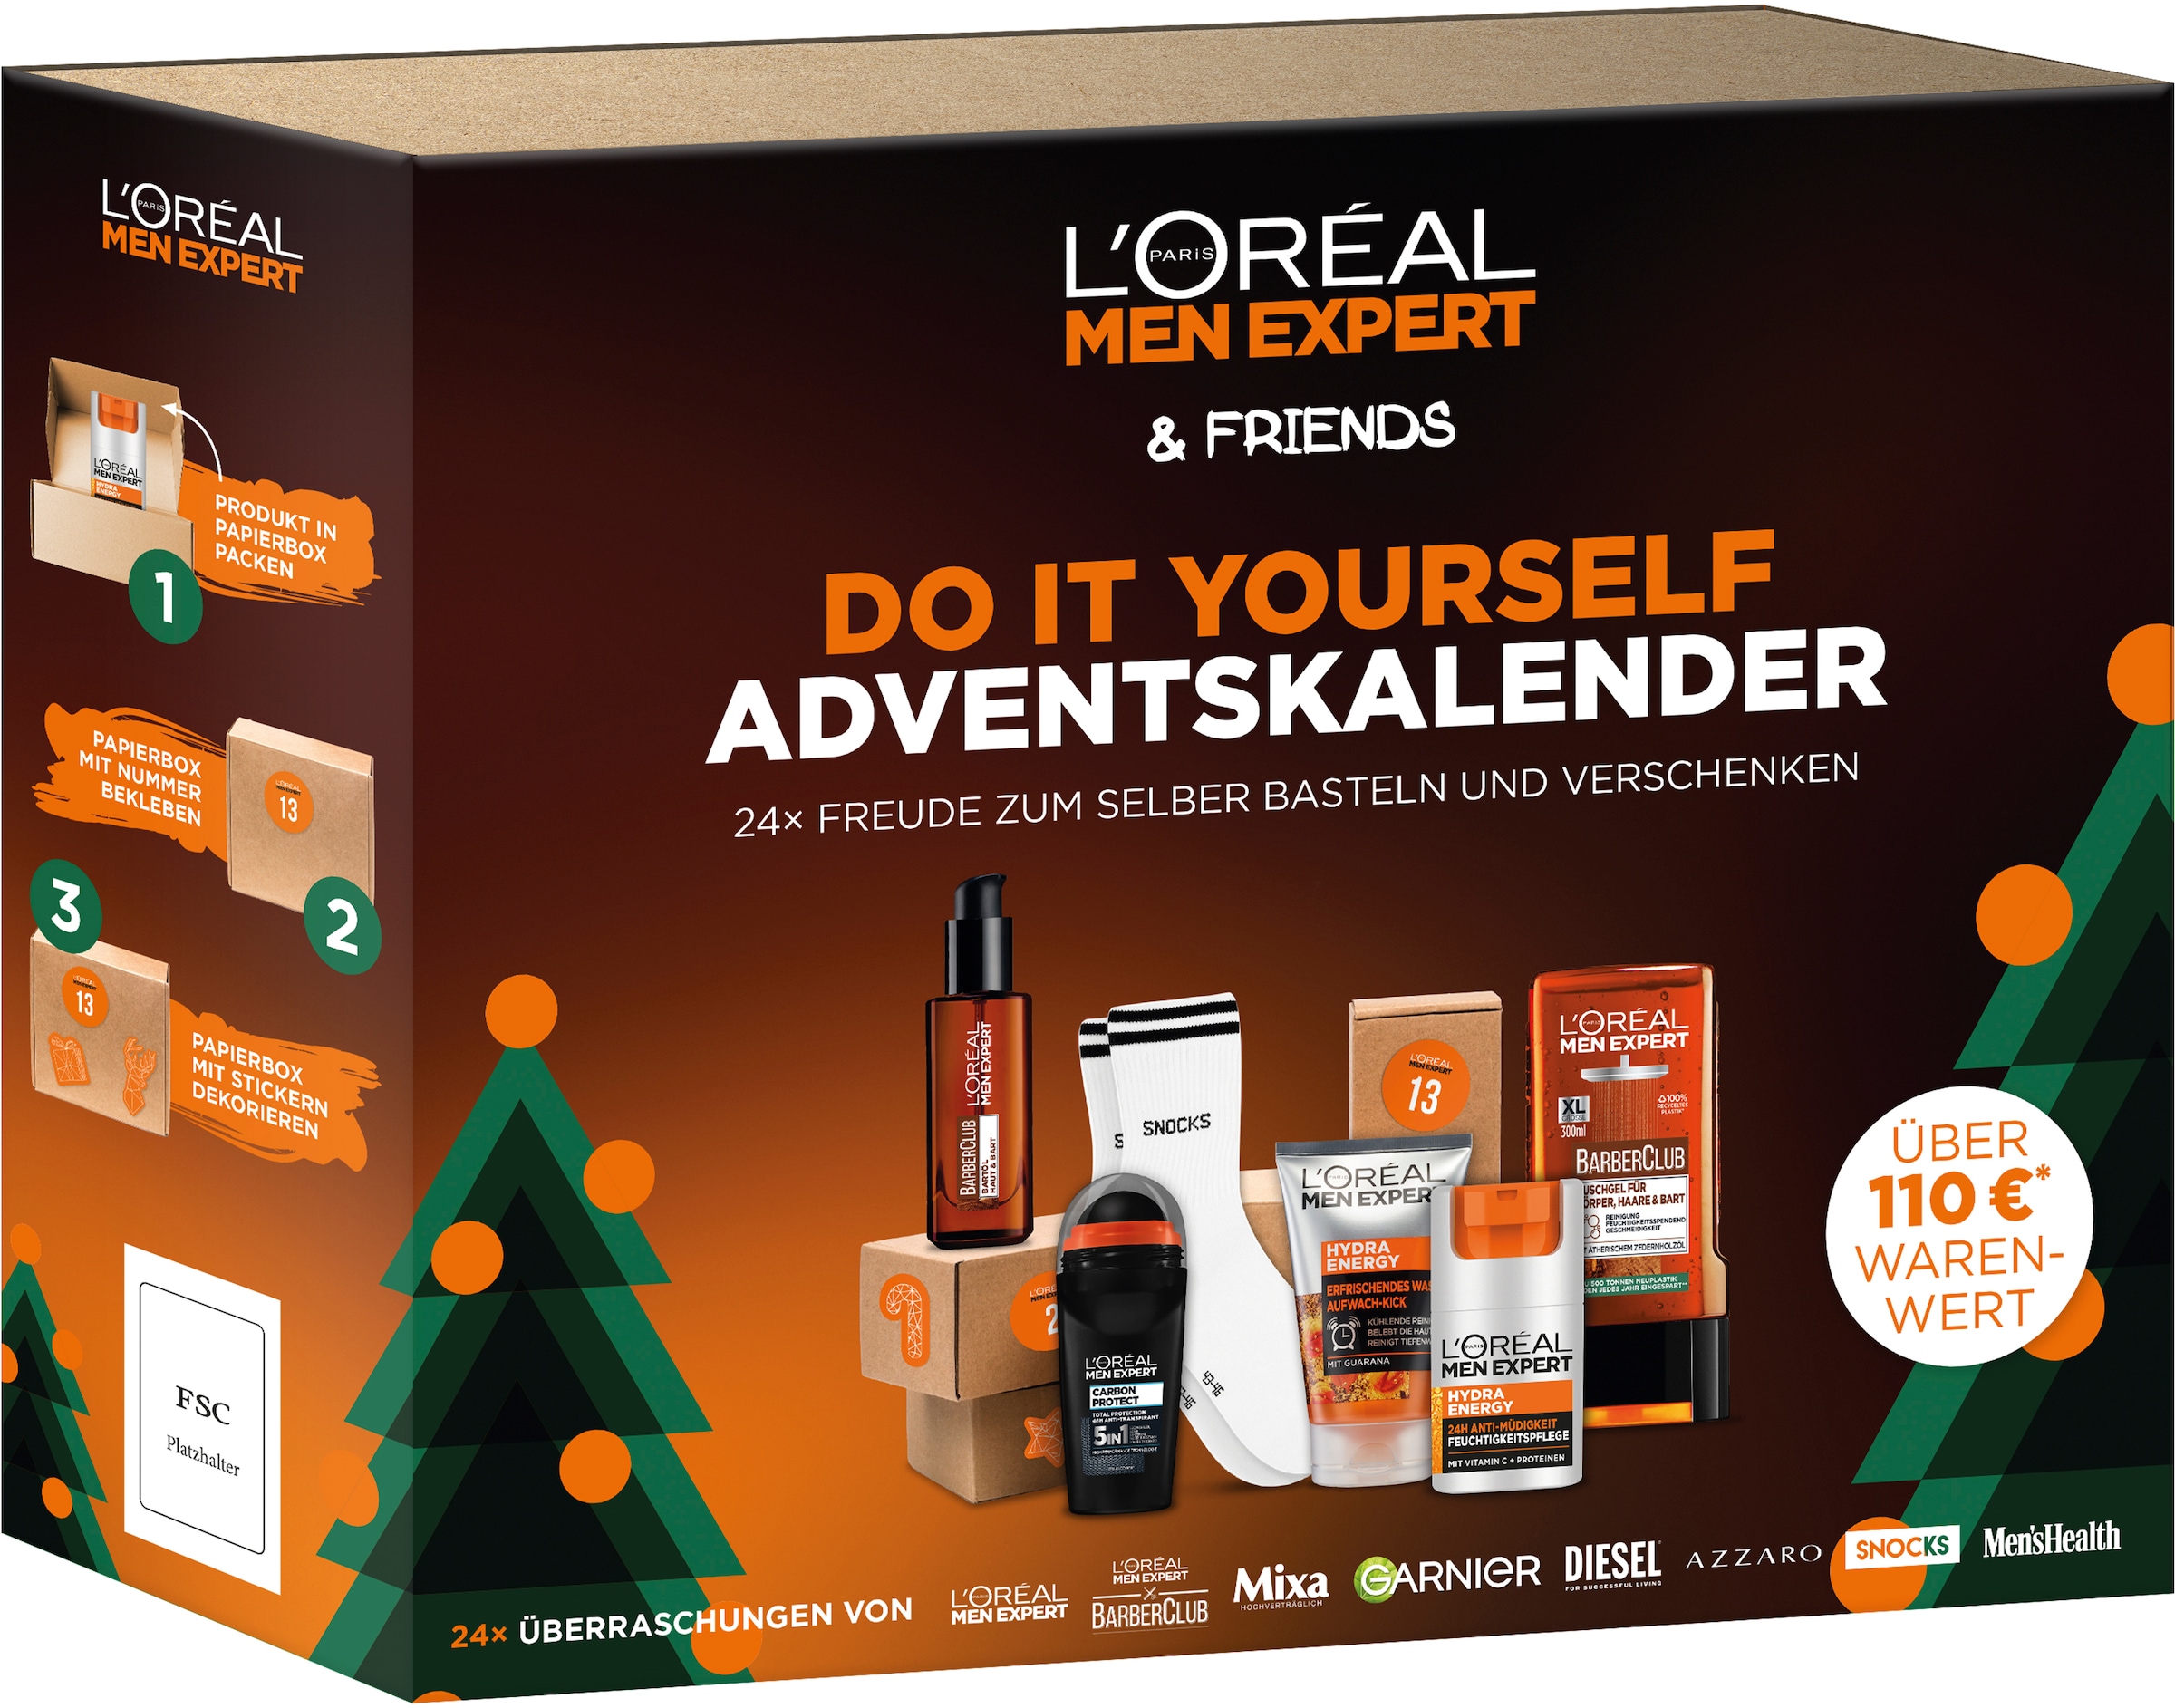 PARIS online L\'ORÉAL DIY Adventskalender Adventskalender mit Erwachsene, für kaufen 24 »L\'Oréal Expert MEN günstig Men EXPERT Boxen«, Geschenk-Set